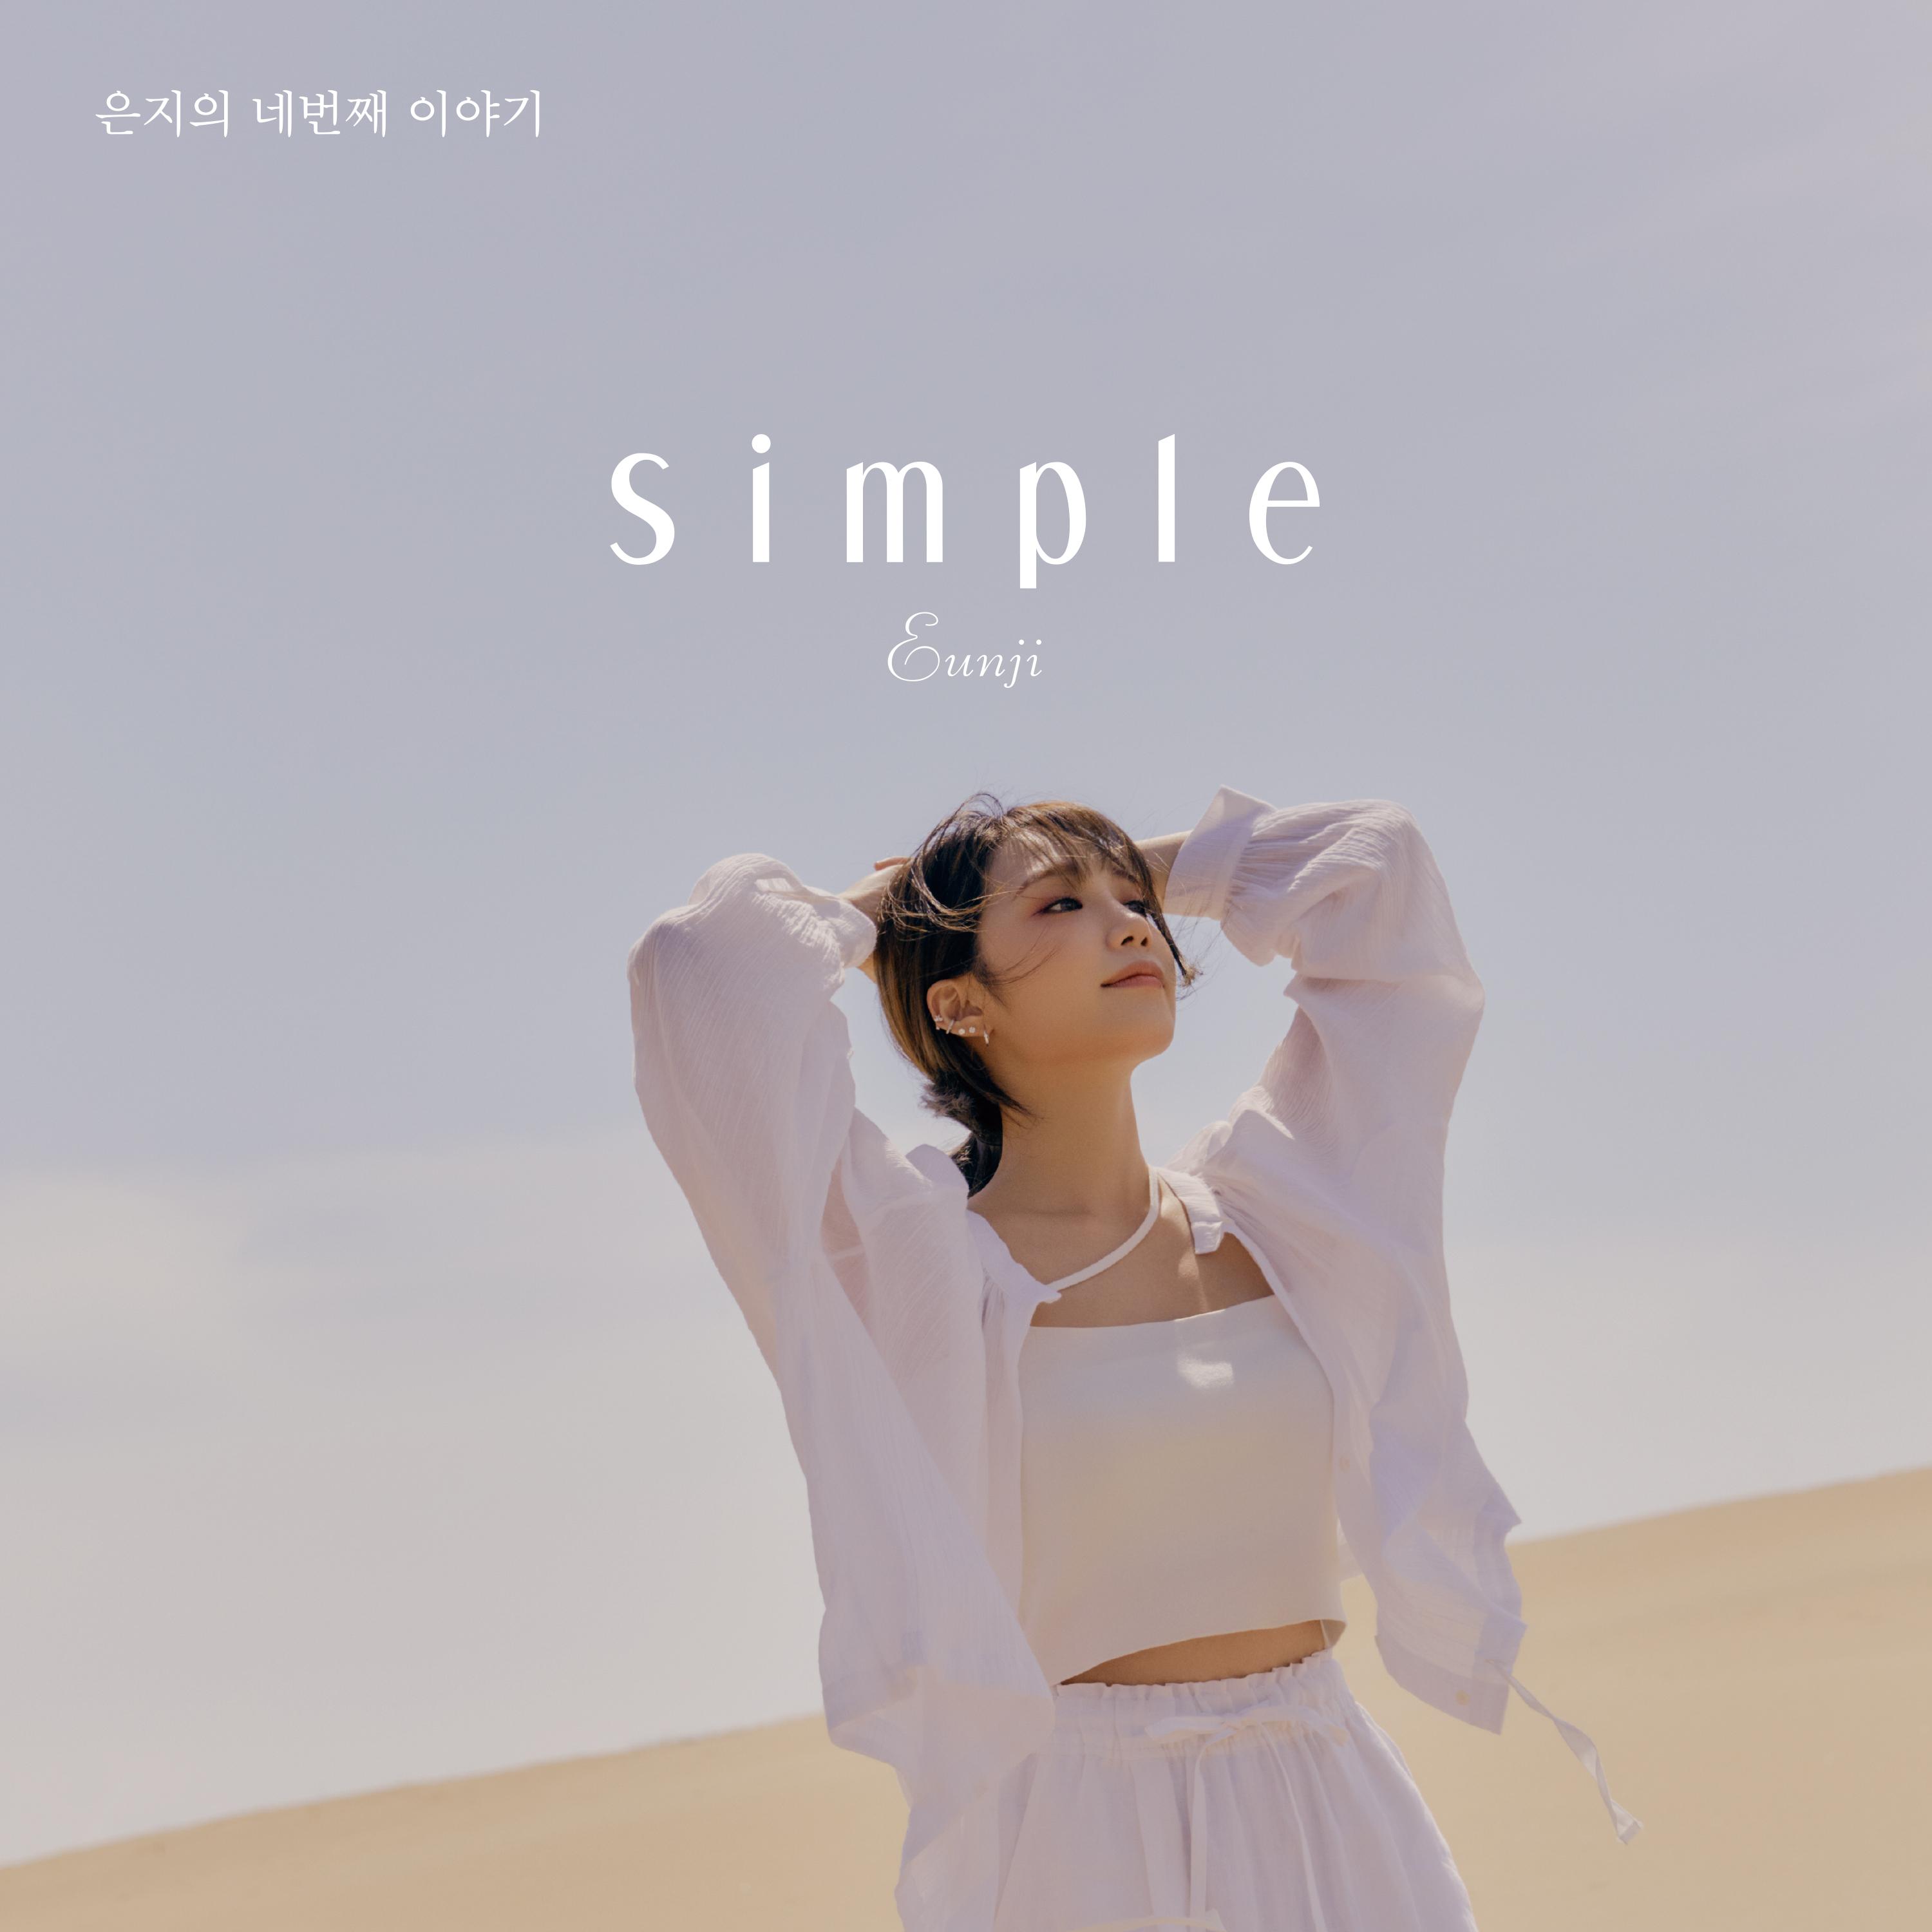 AWay歌词 歌手郑恩地-专辑Simple-单曲《AWay》LRC歌词下载